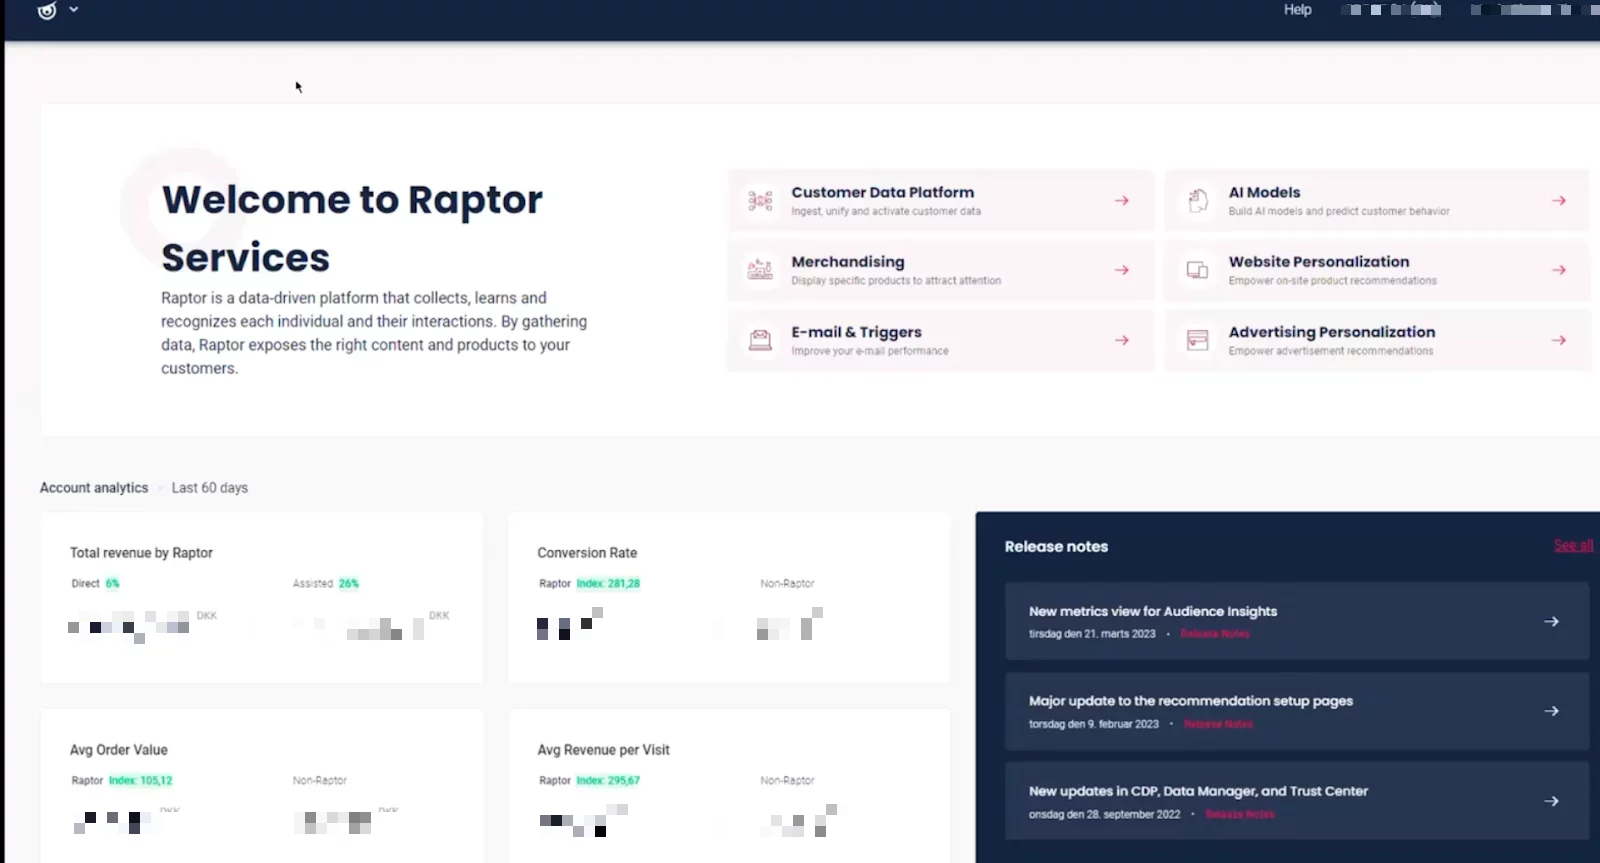 Tableau de bord de la Customer Data Platform Raptor.